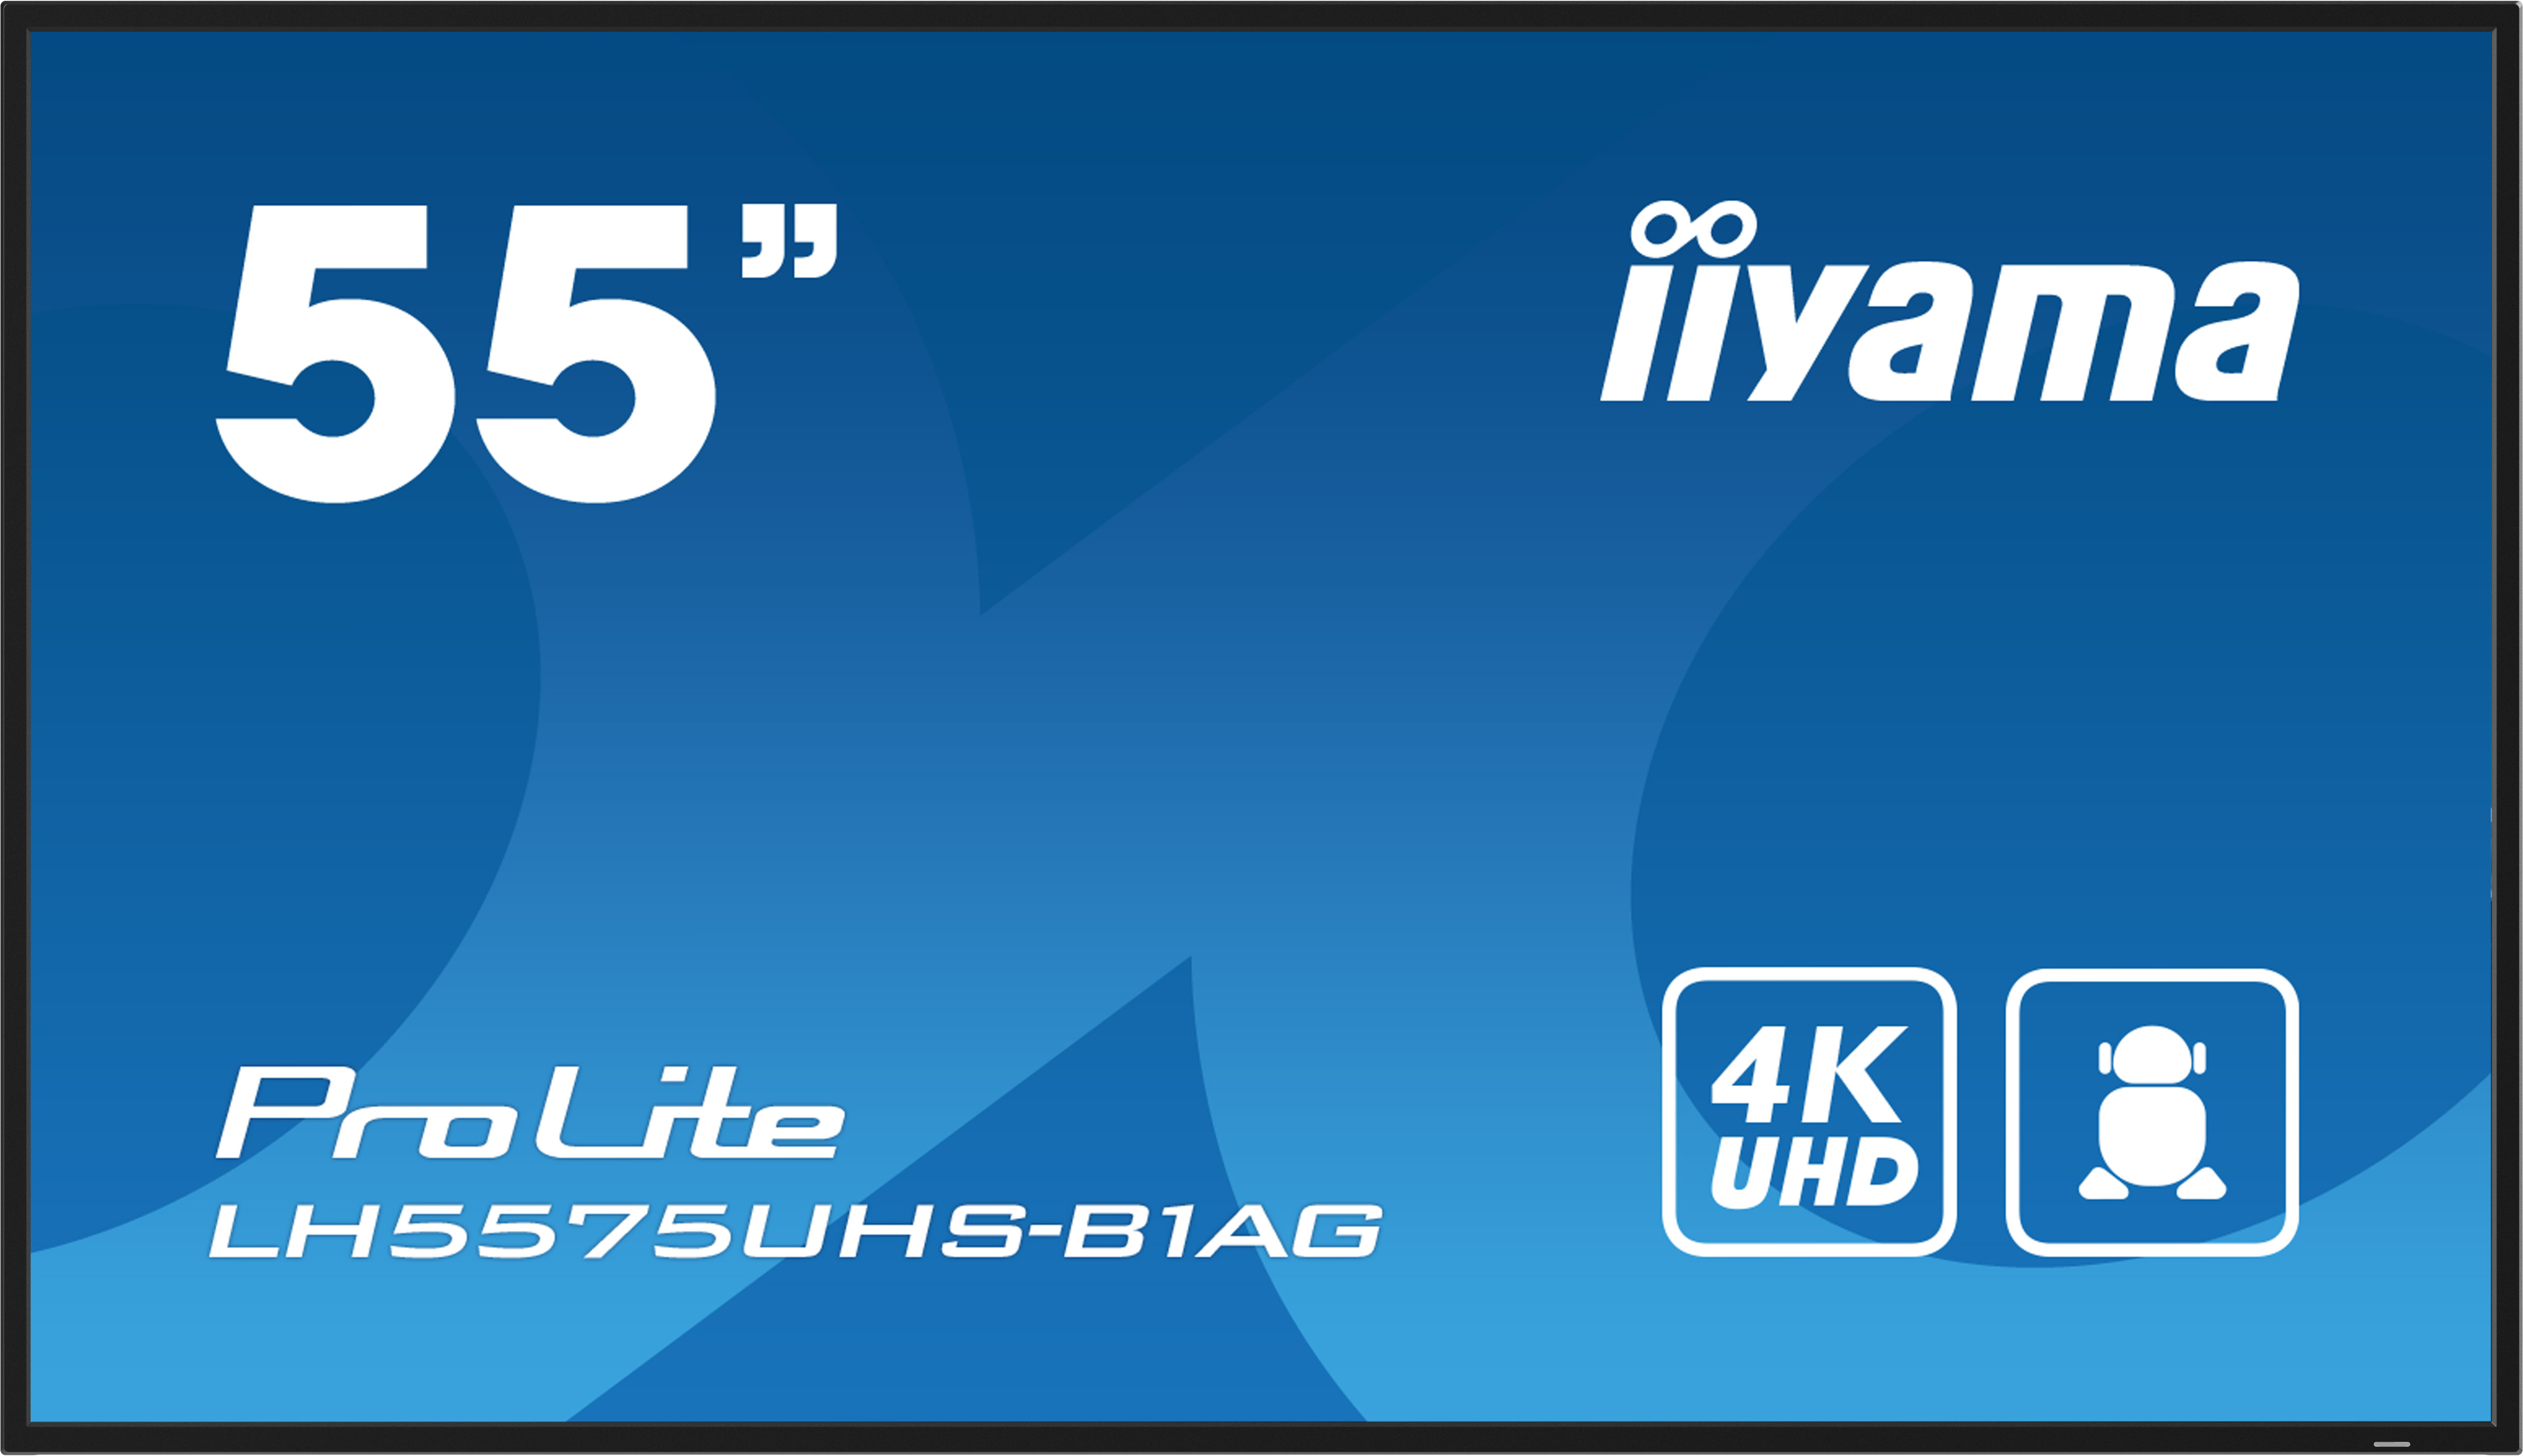 iiyama ProLite LH5575UHS-B1AG - 55 inch - 500 cd/m² - 4K - Ultra-HD - 3840x2160 pixels - 24/7 - Android - Display - Black